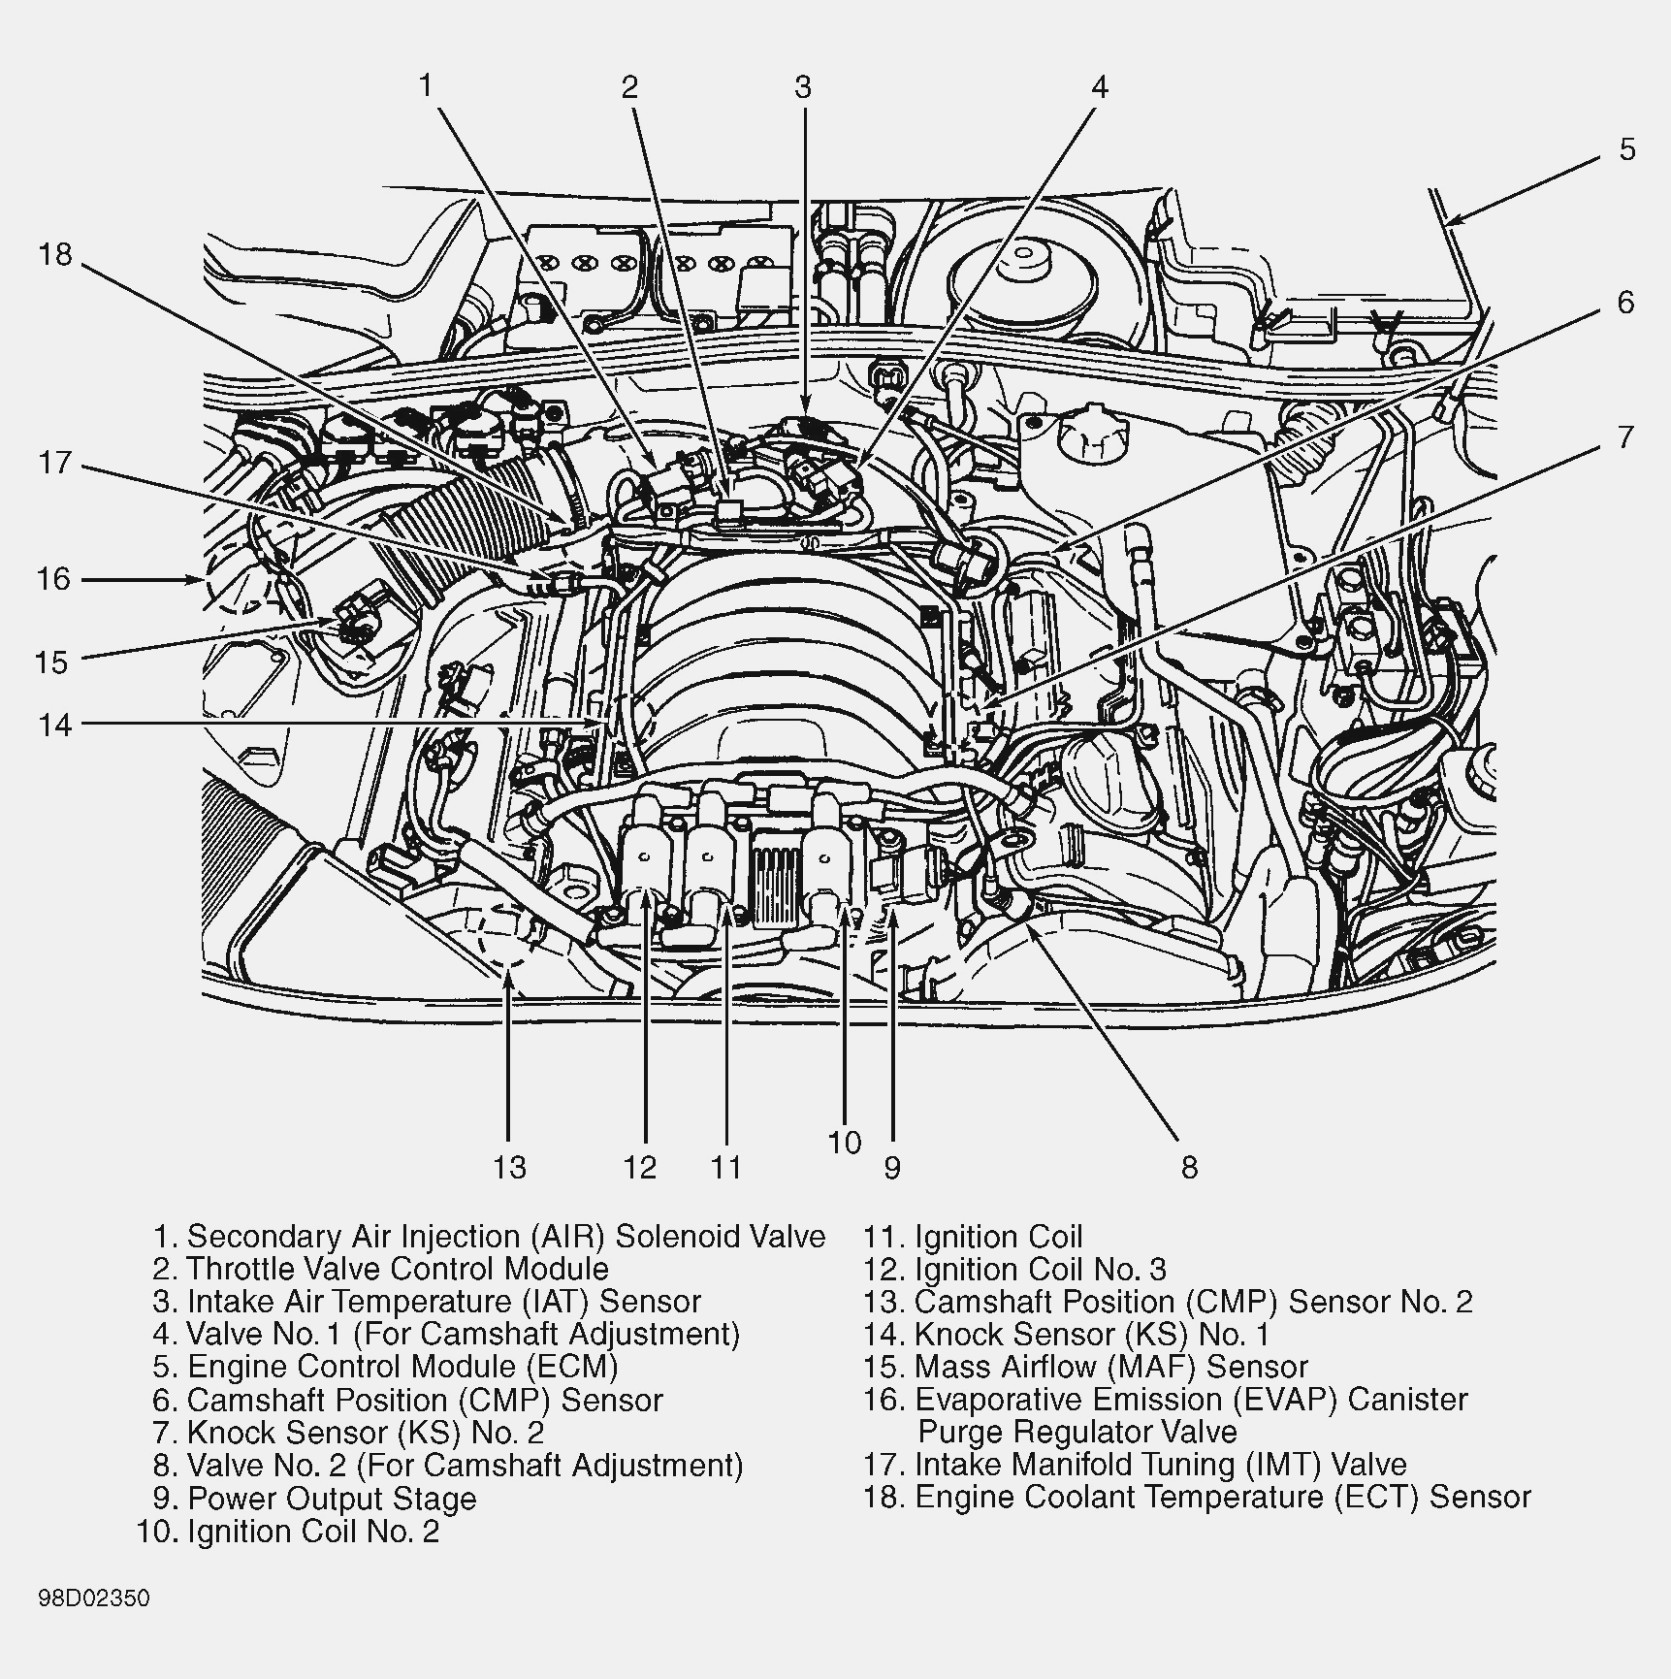 Chevy Lumina Engine Diagram 95 Dodge Neon Engine Diagram Schema Wiring Diagram Of Chevy Lumina Engine Diagram